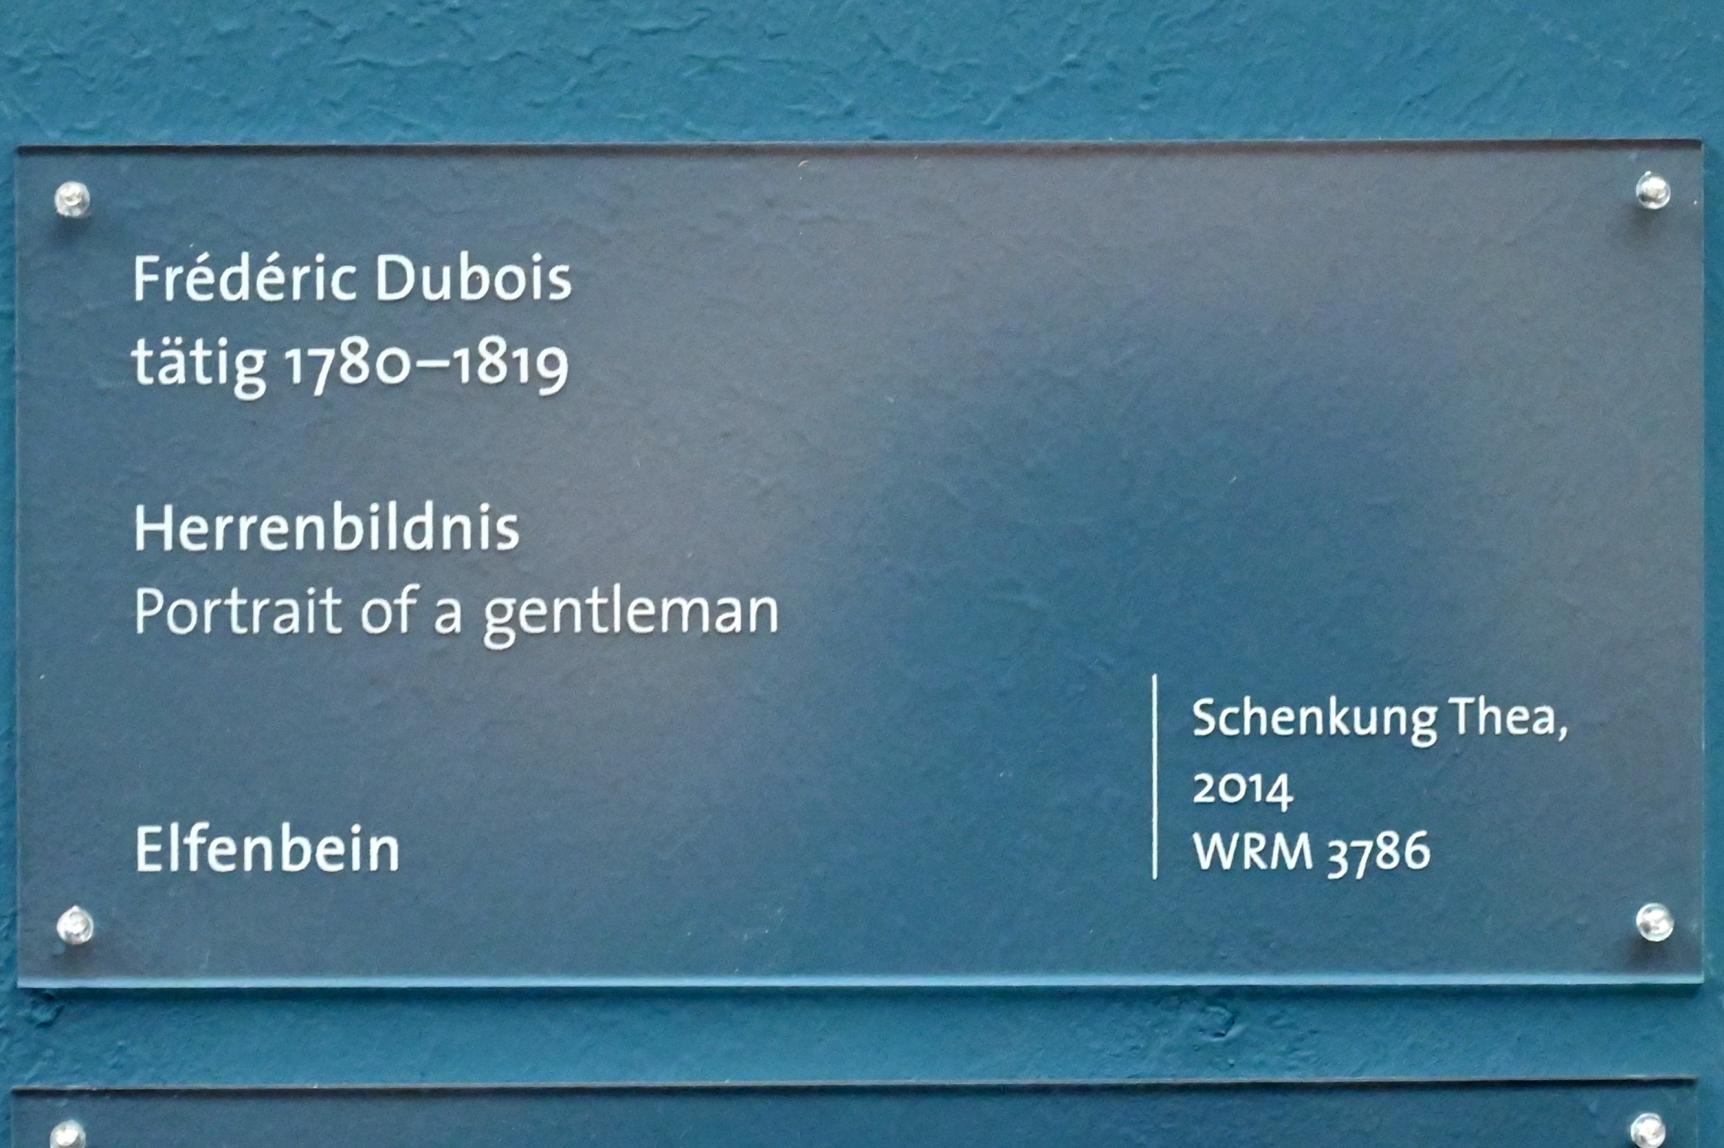 Frédéric Dubois (Undatiert), Herrenbildnis, Köln, Wallraf-Richartz-Museum, Barock - Saal 9, Undatiert, Bild 2/2